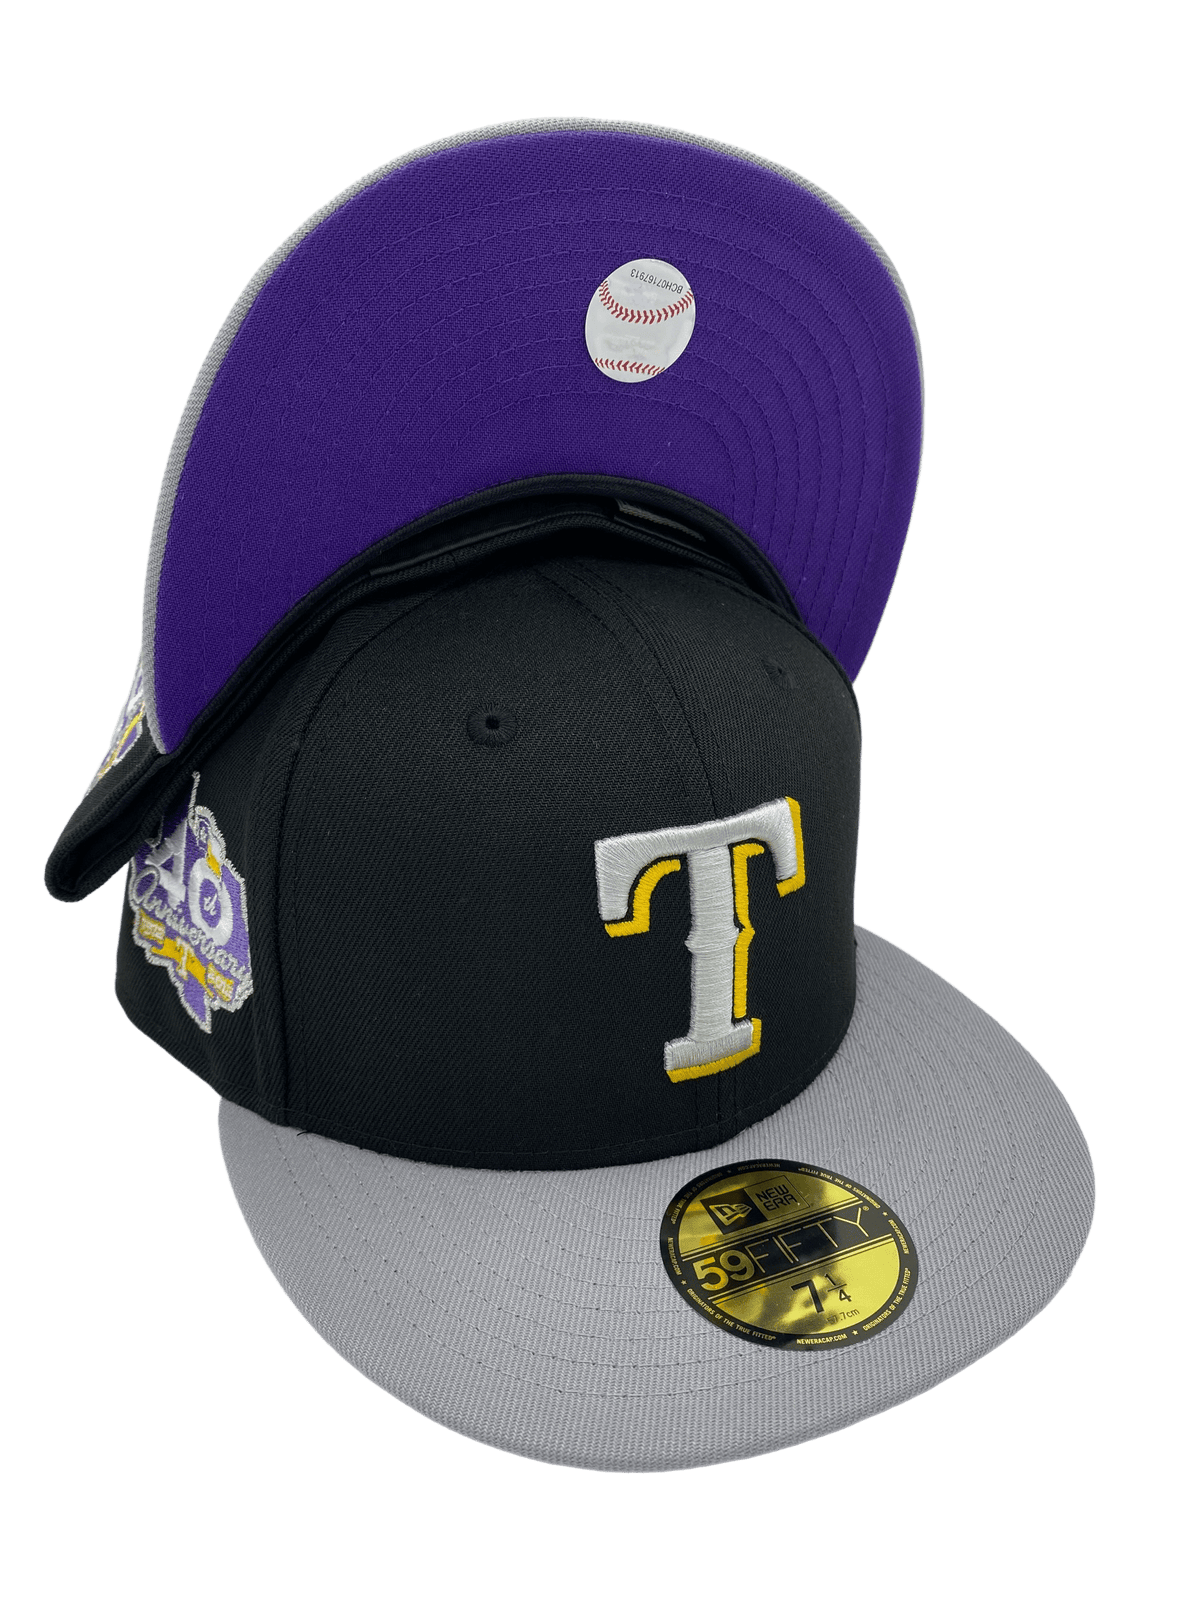 new era texas rangers hat